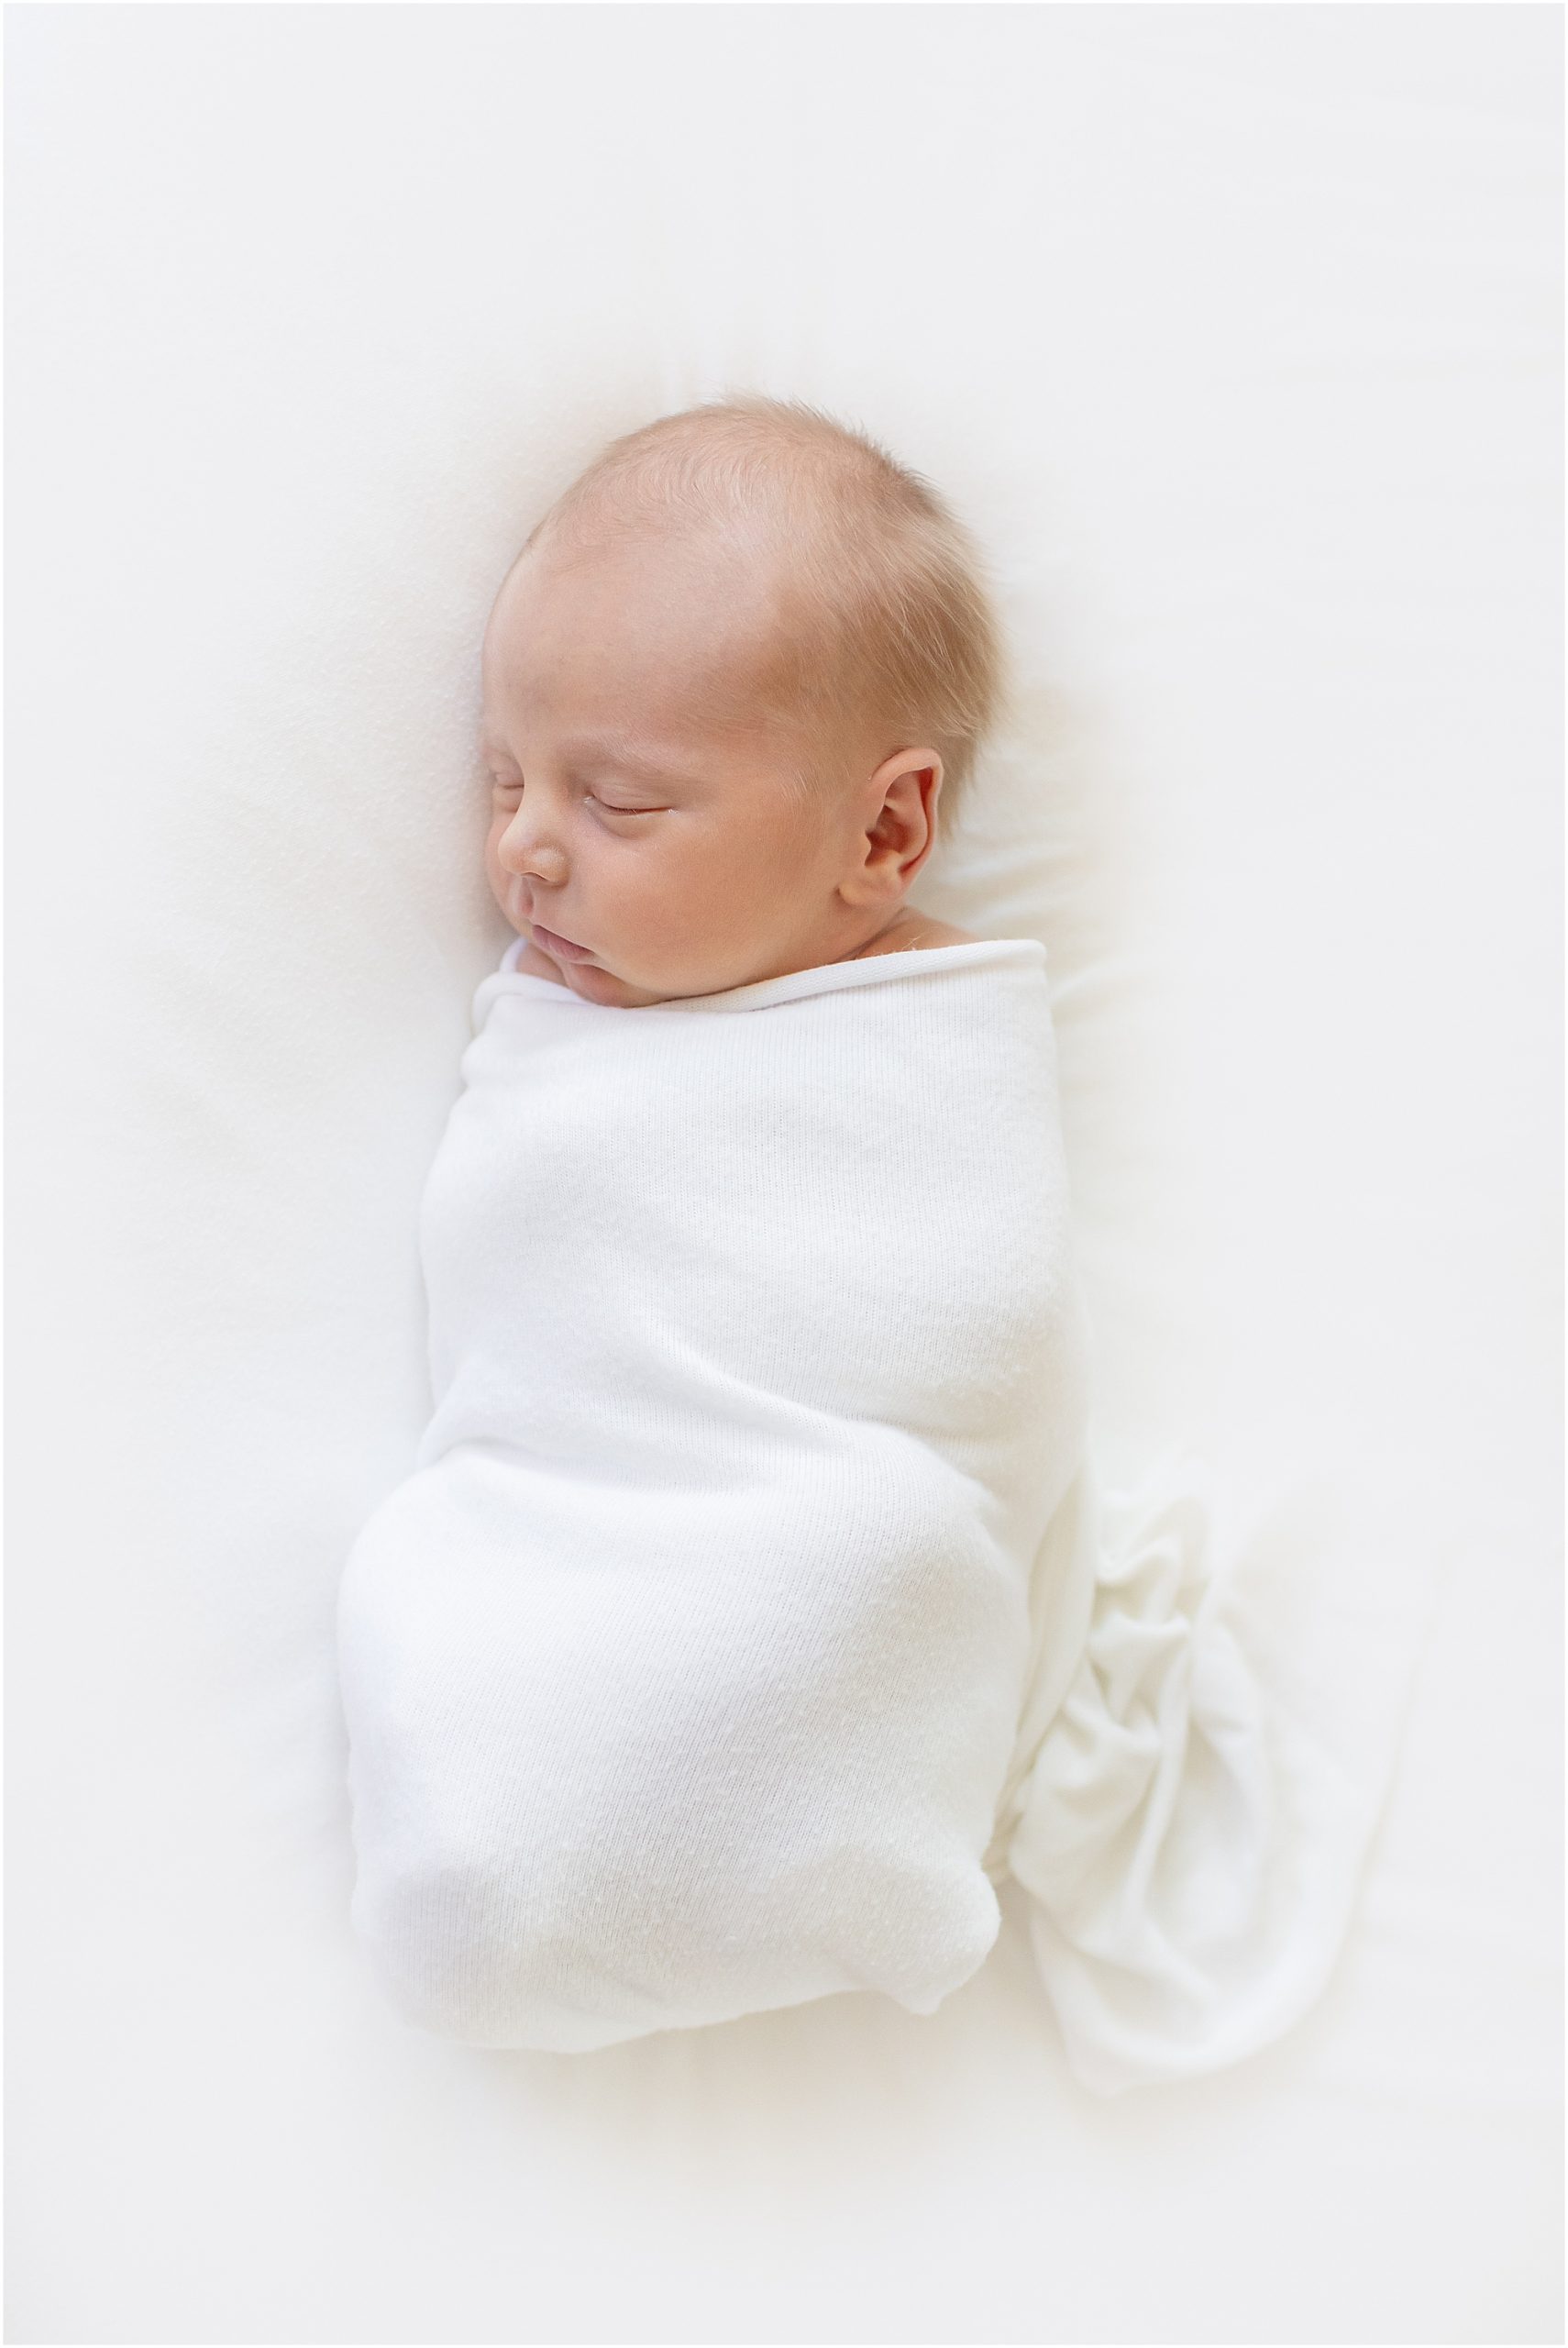 Oklahoma Newborn photography